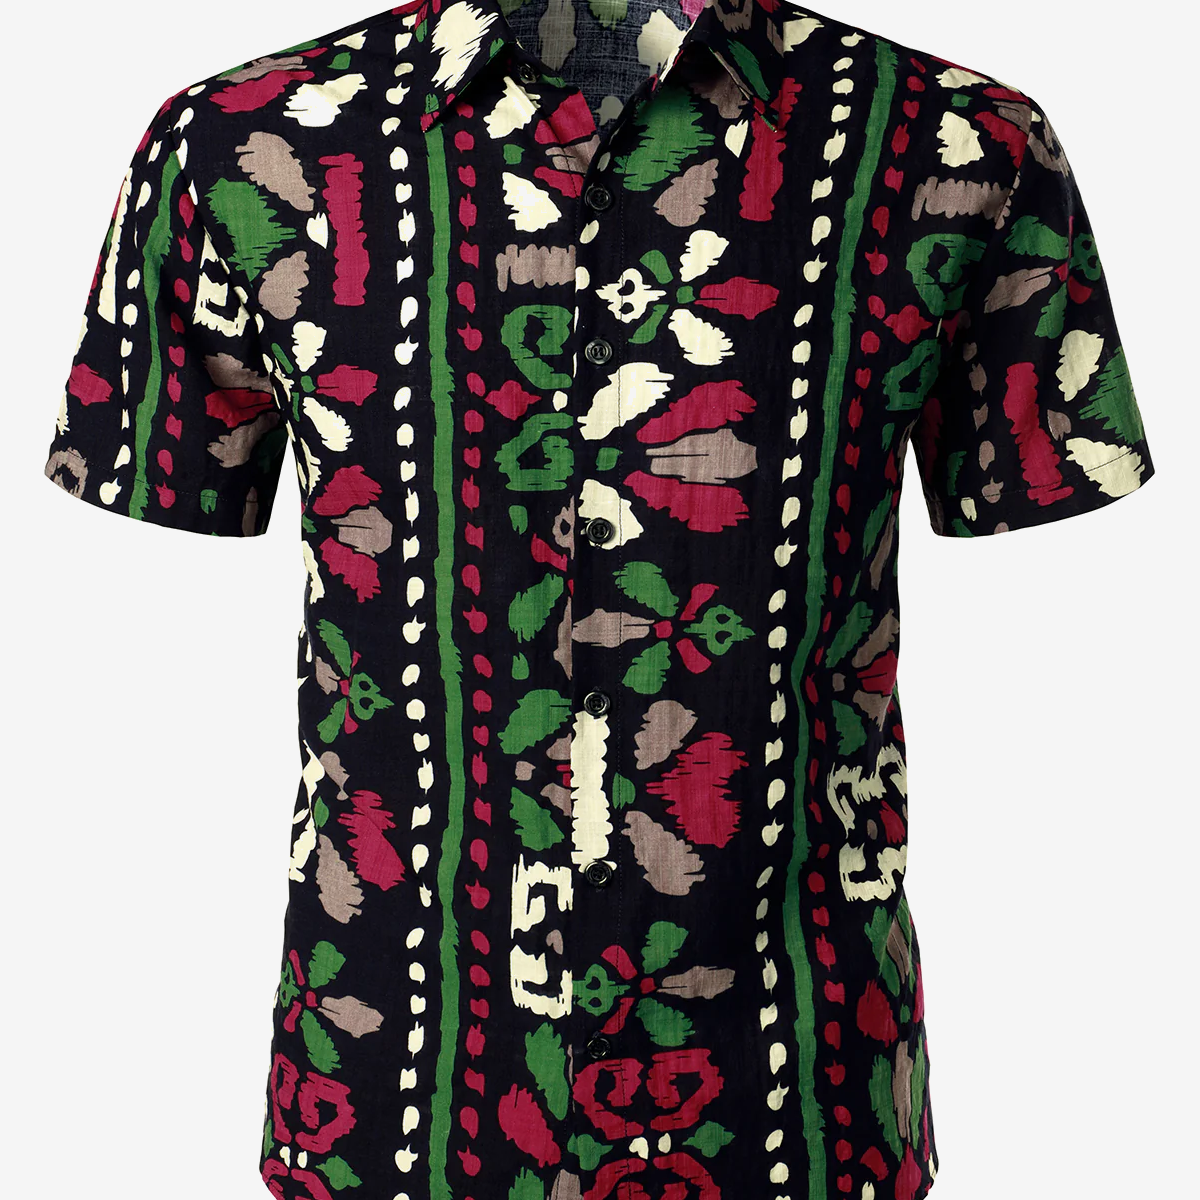 Men's Retro Tribal Floral Print Summer Short Sleeve Bohemian Black Shirt